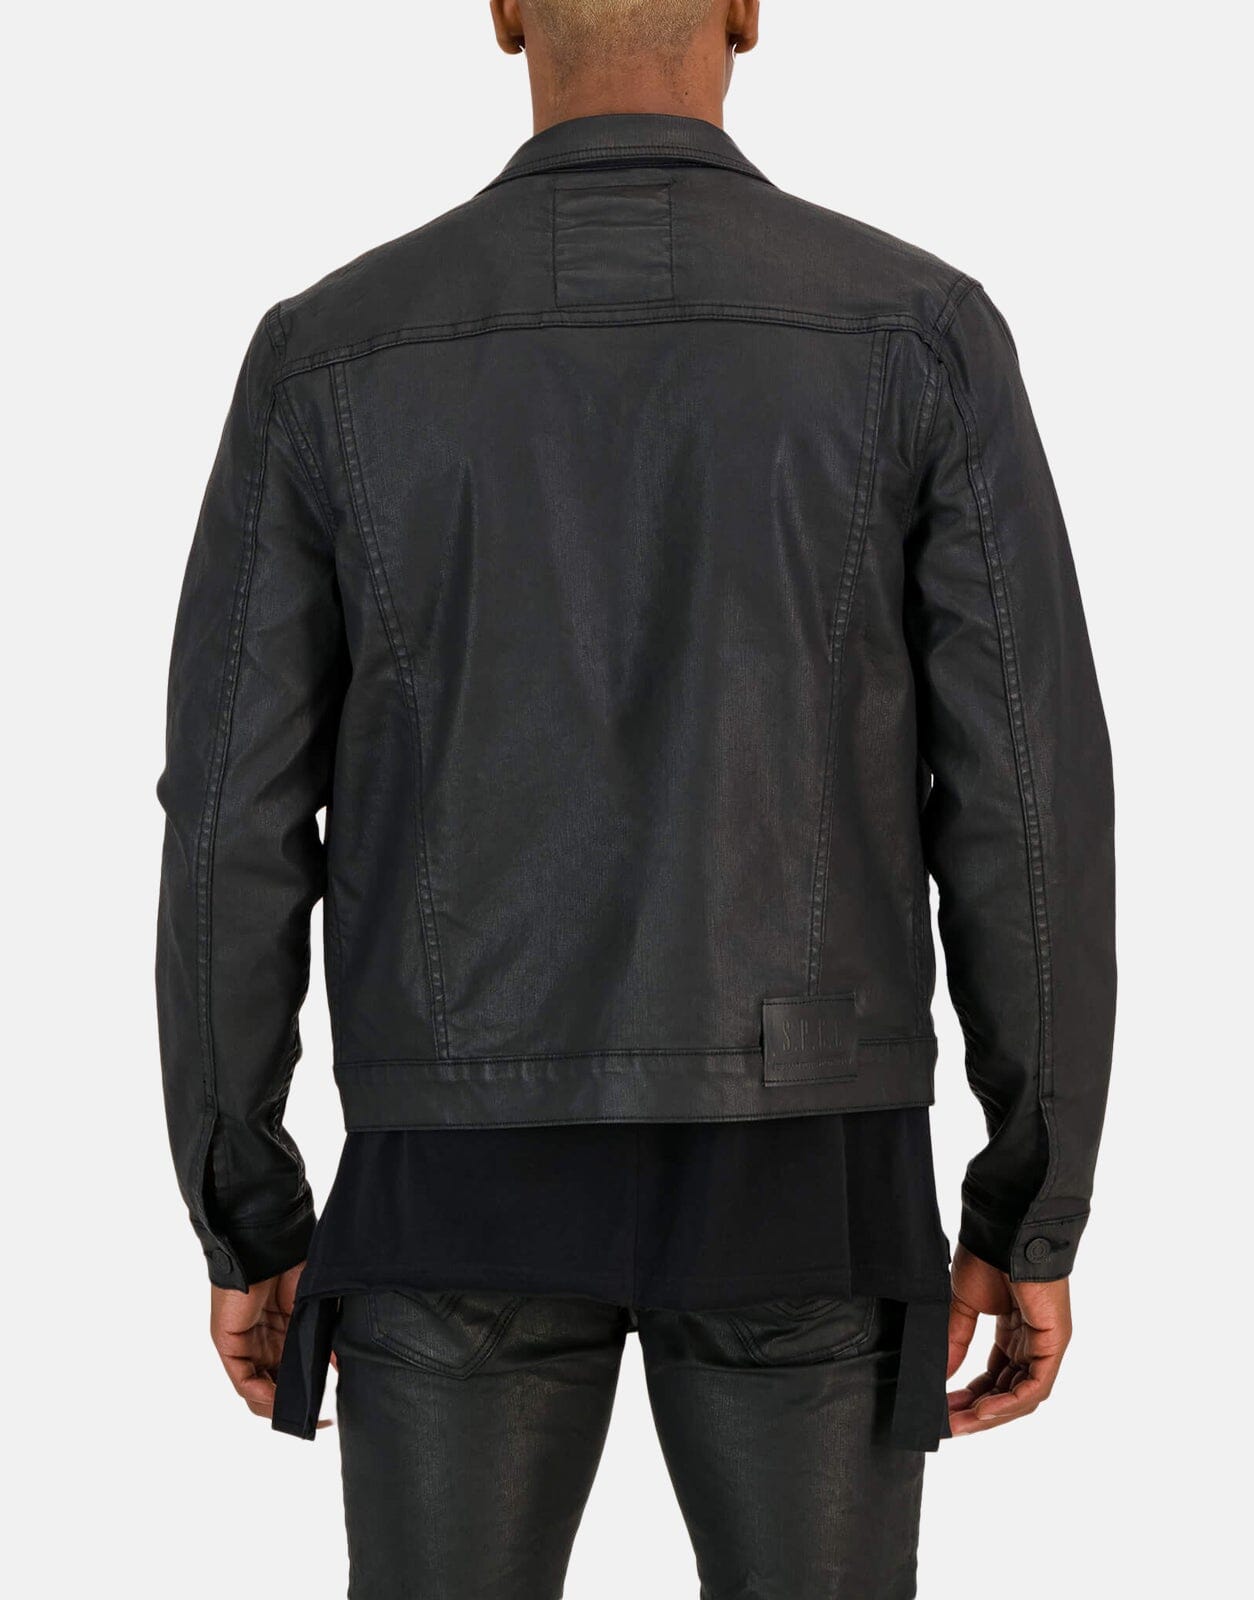 SPCC Black Mamba Jacket Blk - Subwear